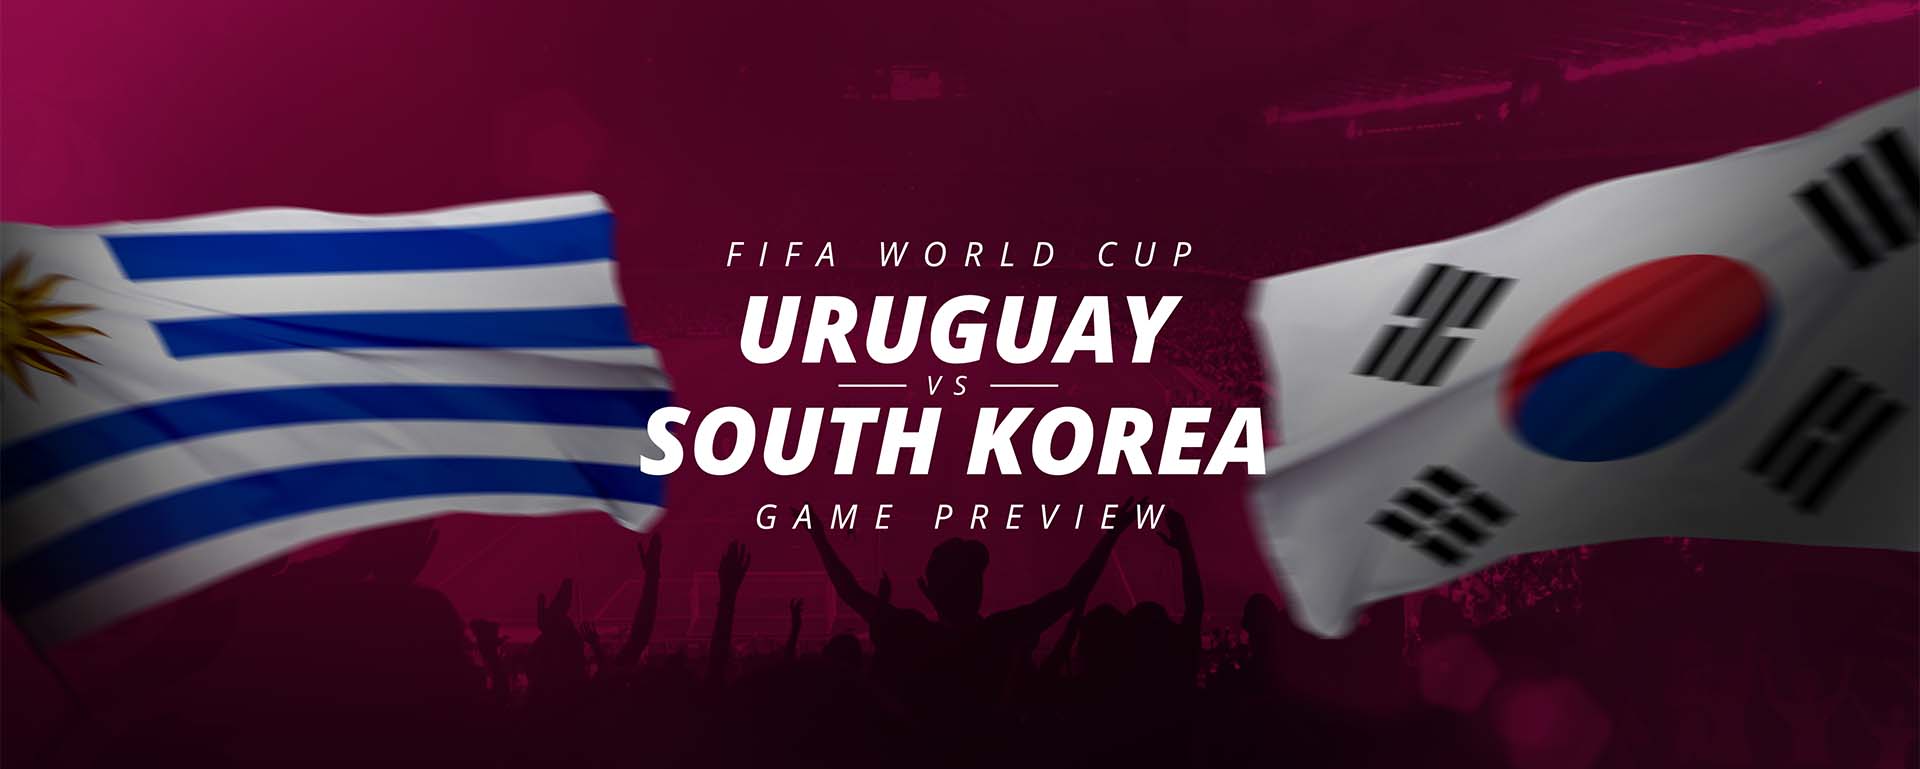 FIFA WORLD CUP: URUGUAY V SOUTH KOREA – GAME PREVIEW